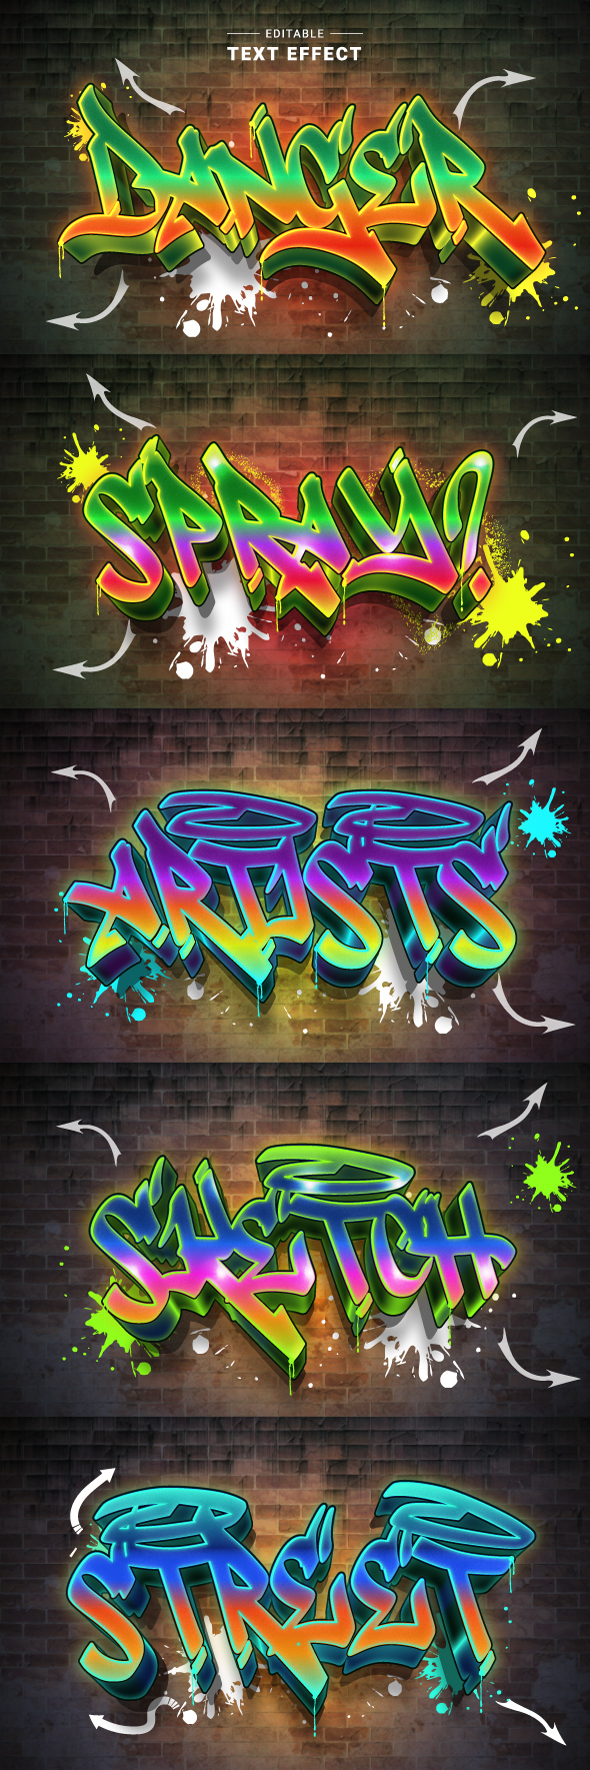 Graffiti Wall Art 3D Text Effects Generator